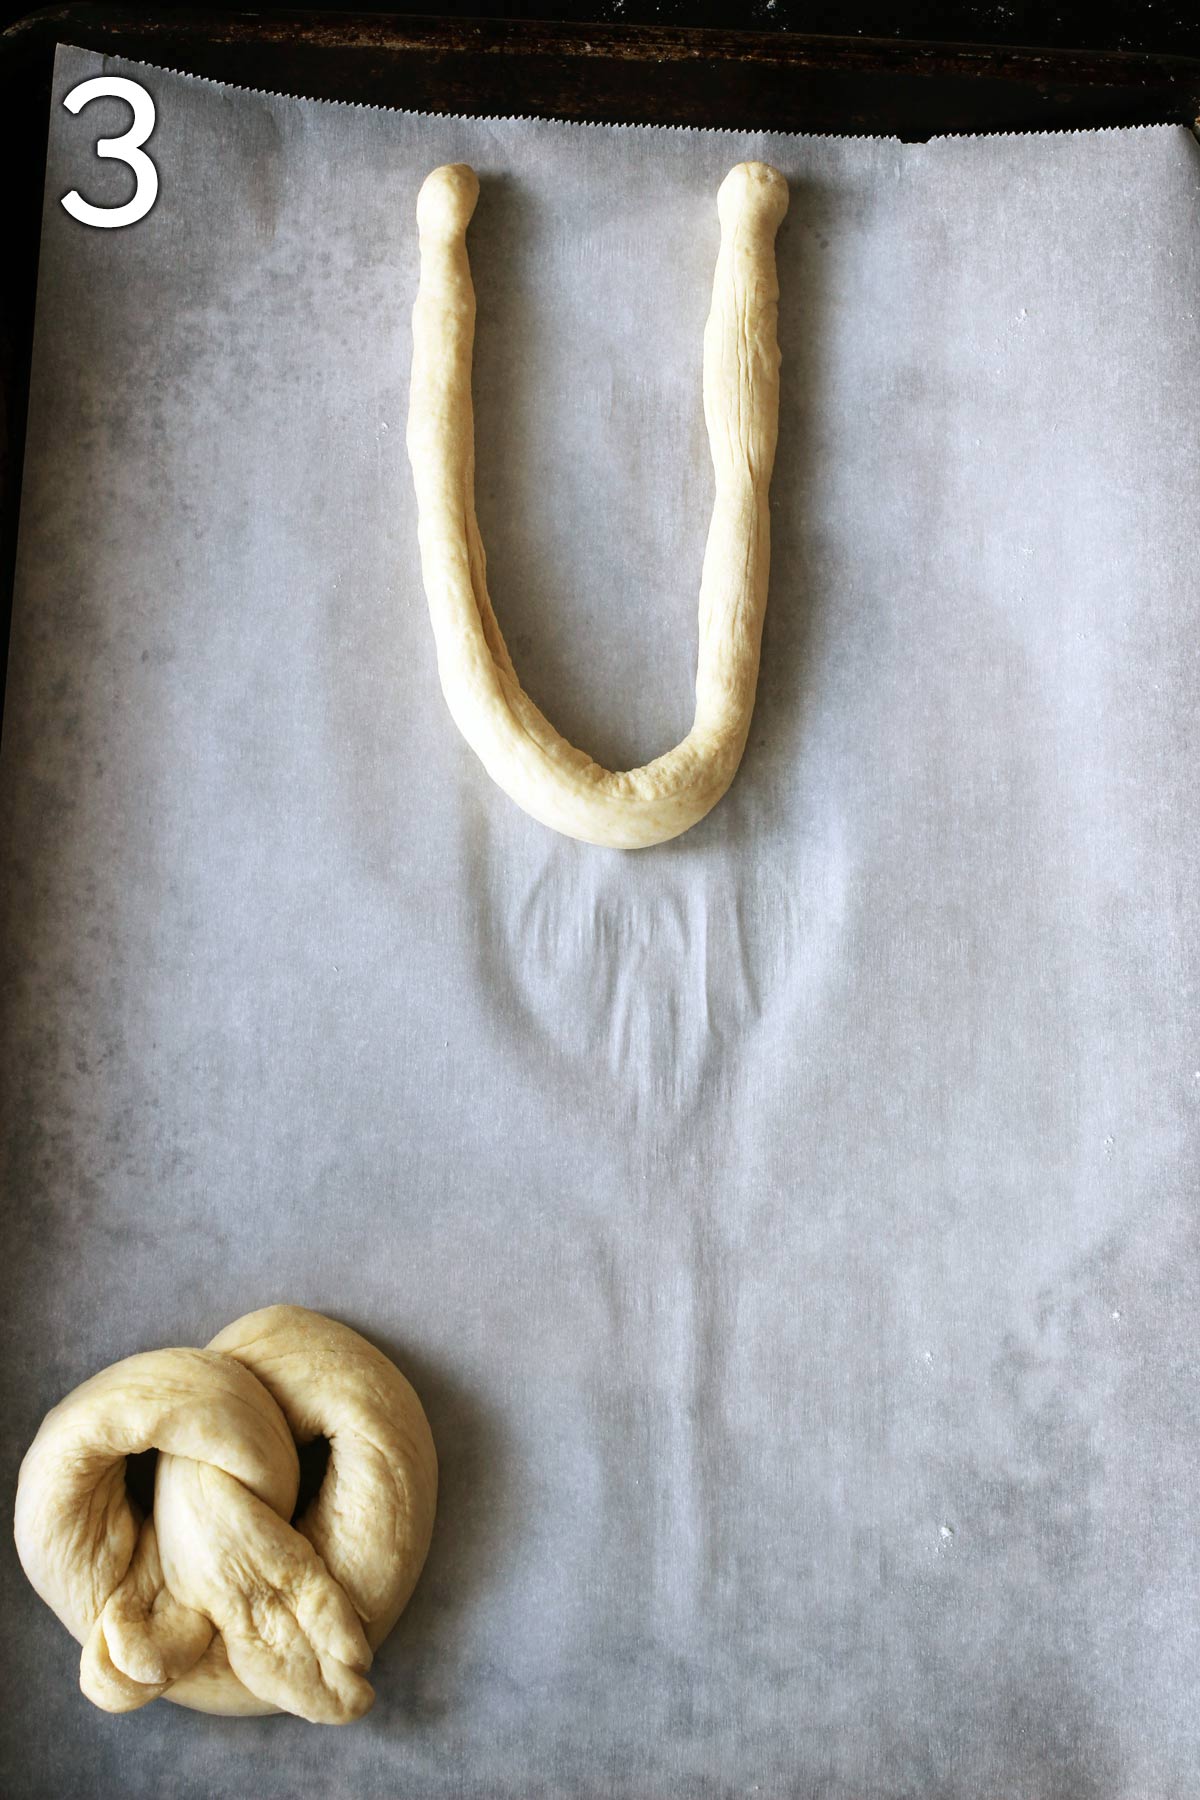 snake of dough shaped into a horseshoe.